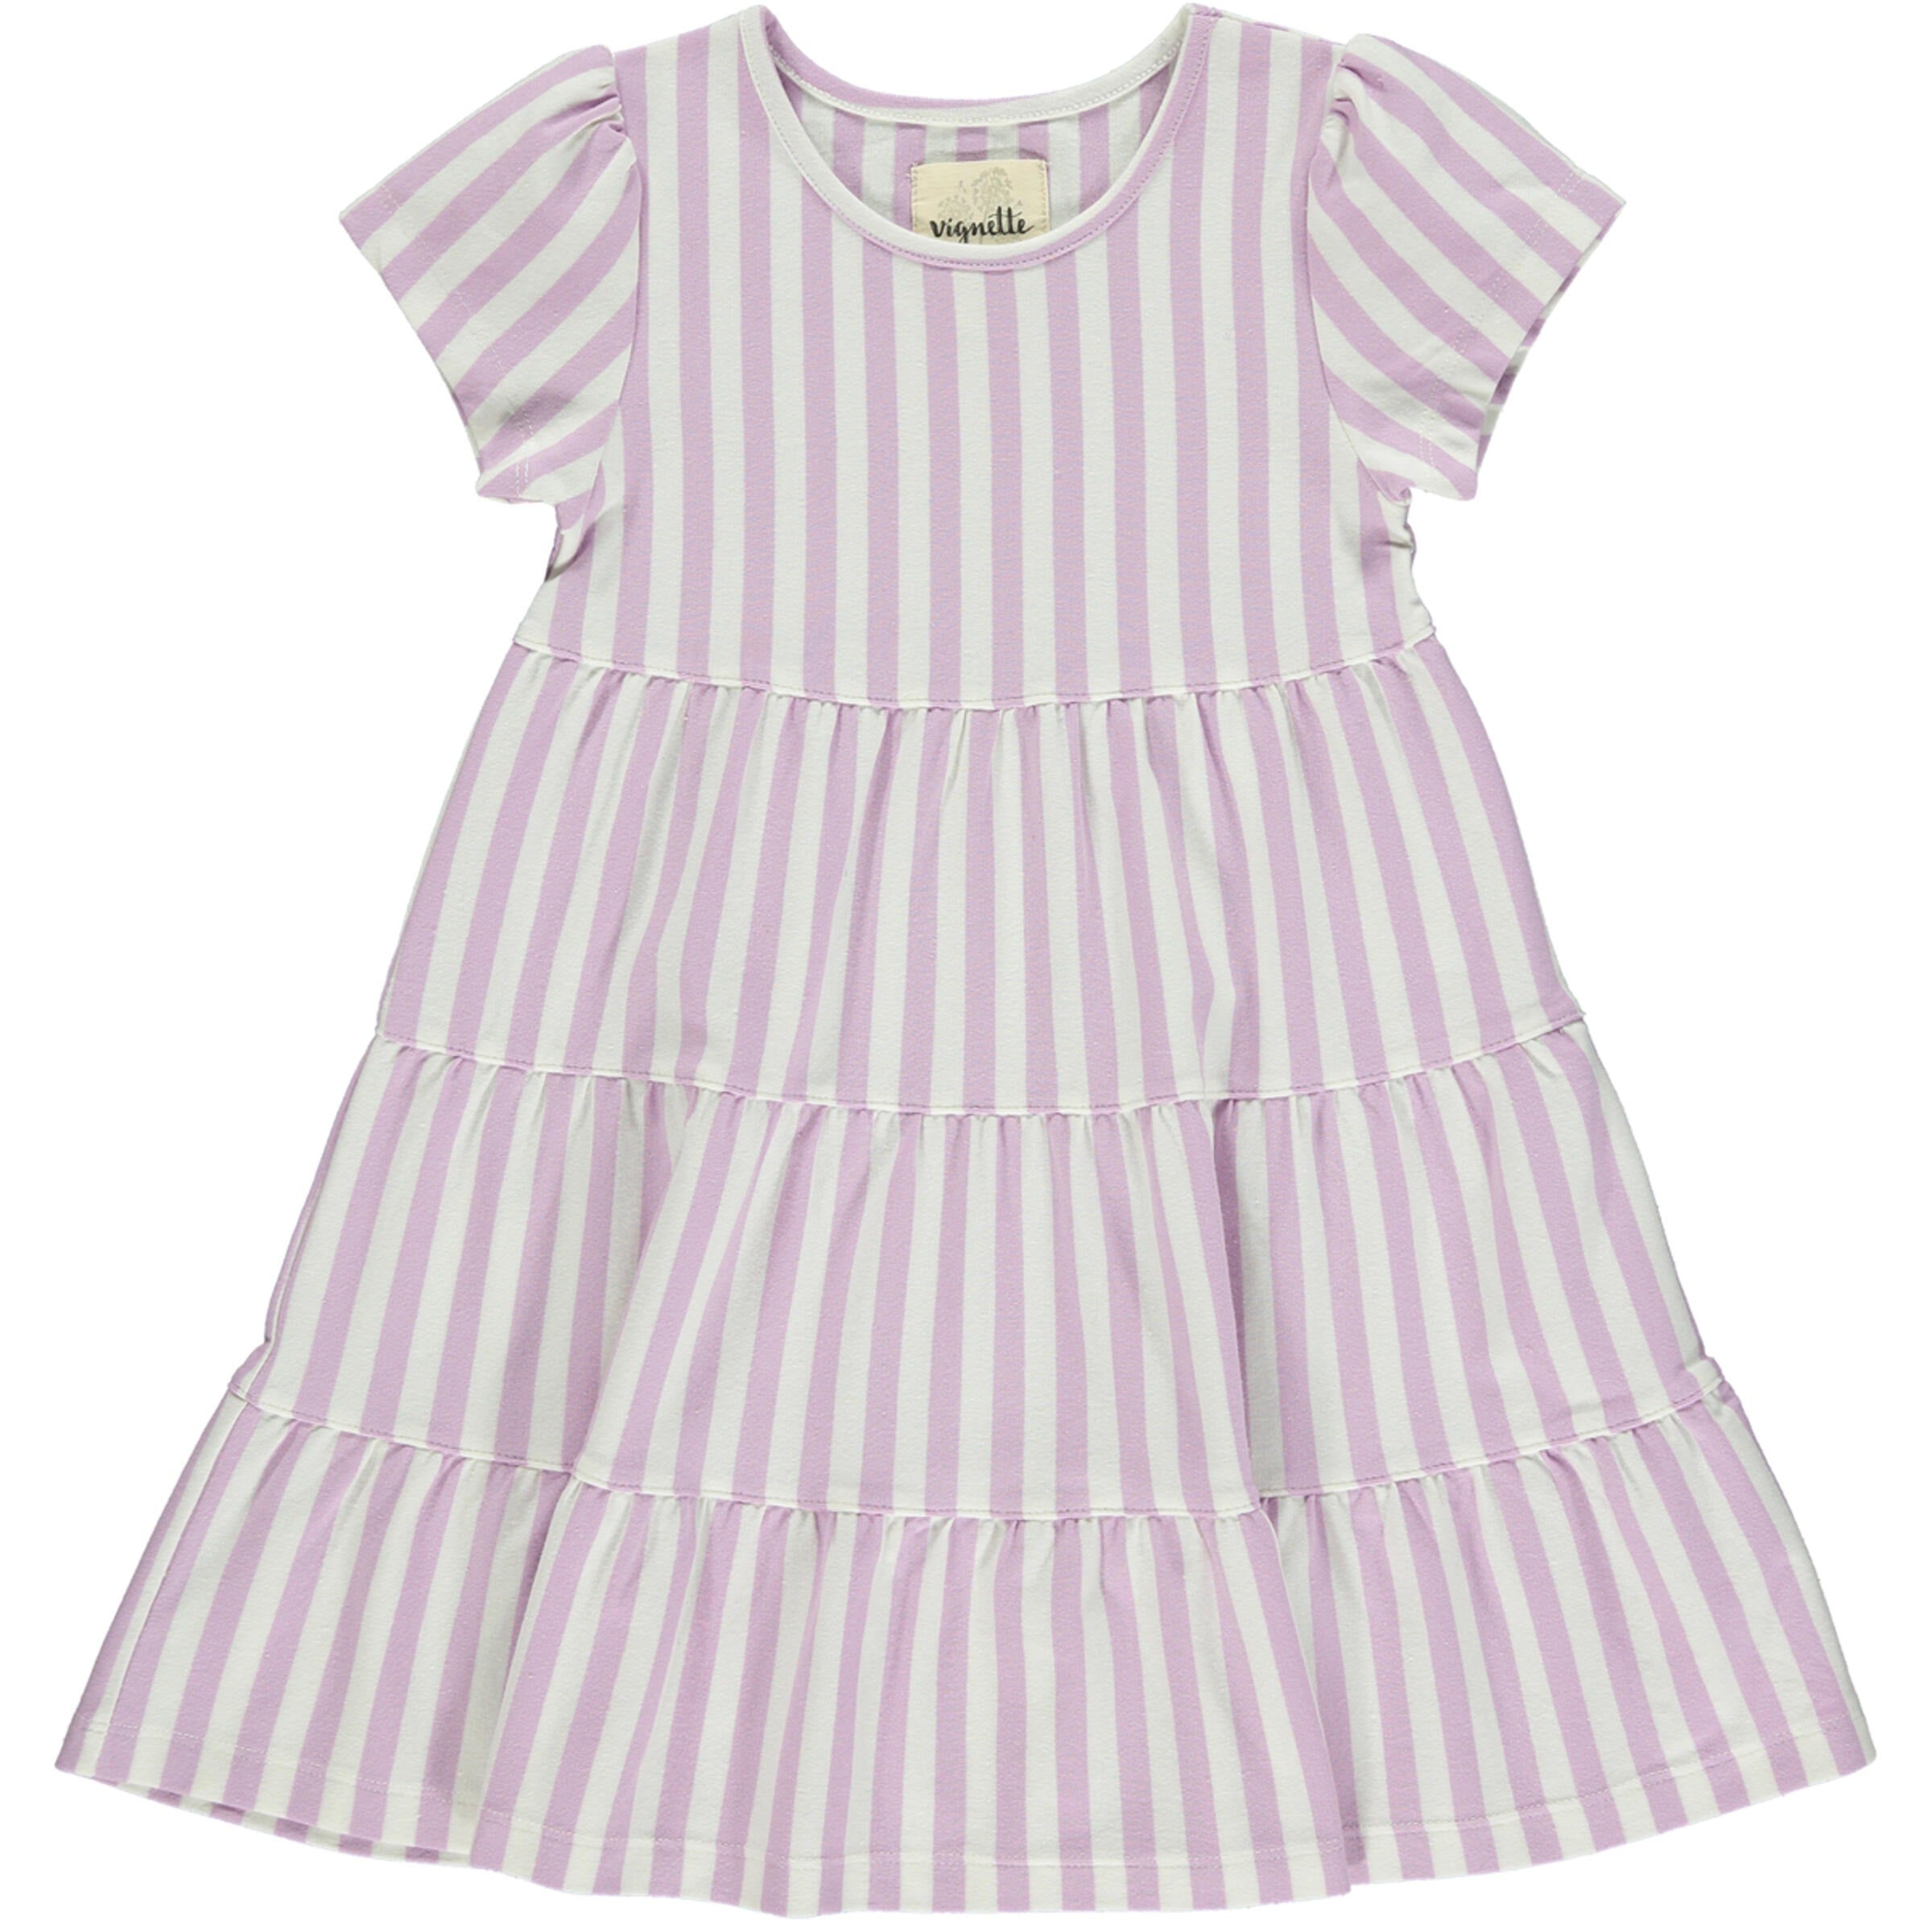 Iona Dress - Lavender/Cream Stripe